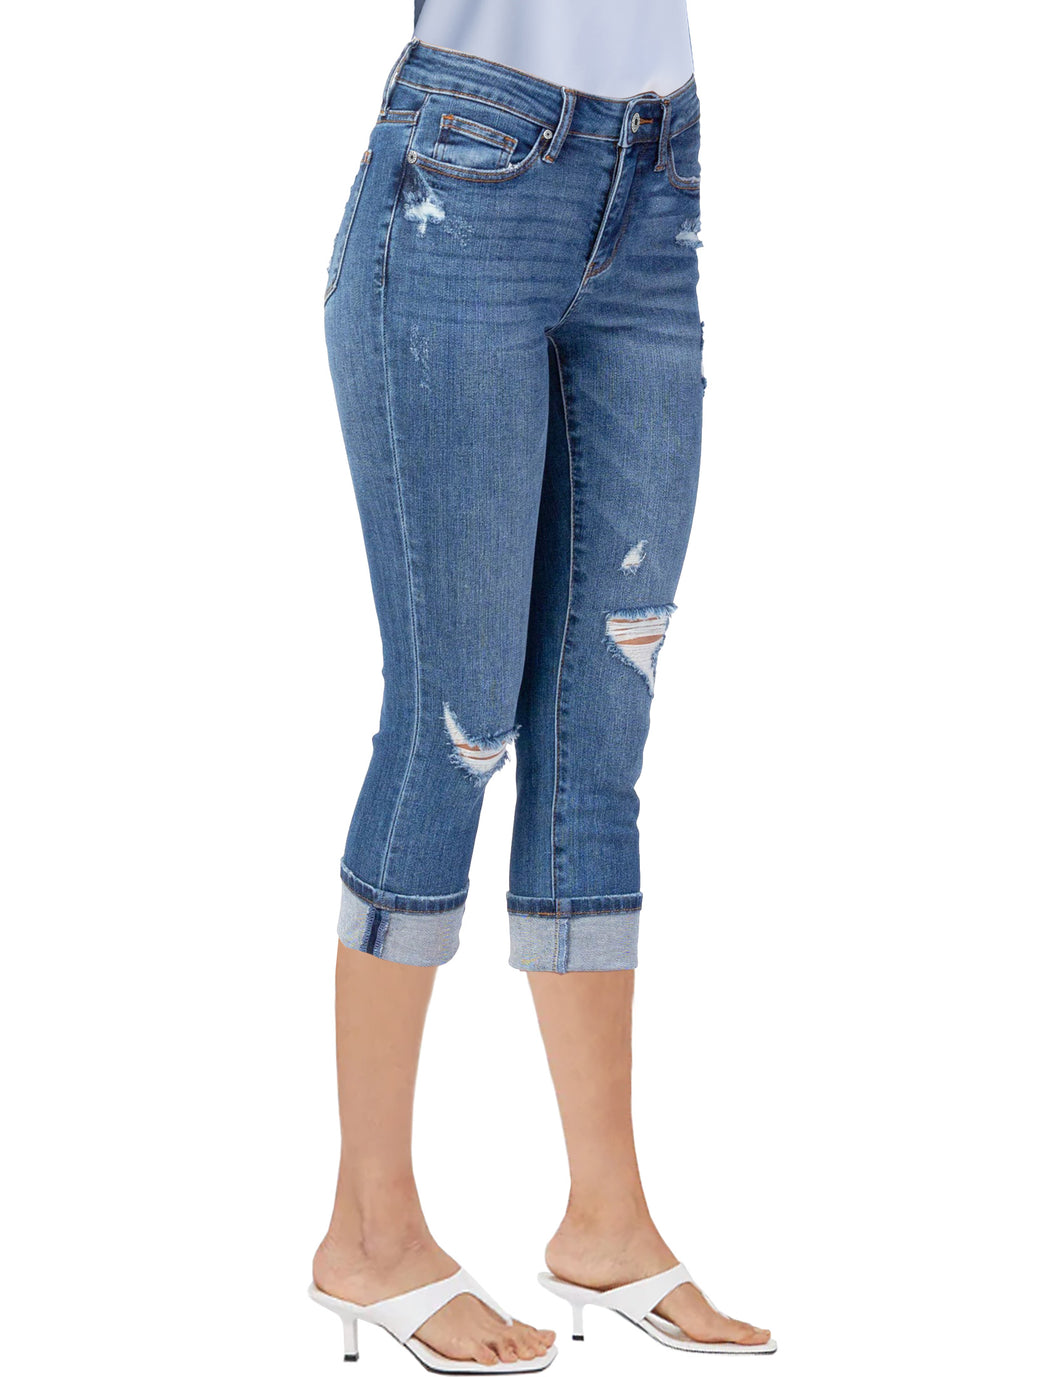 luvamia Womens Capri Jeans for Women High Waisted Skinny Ripped